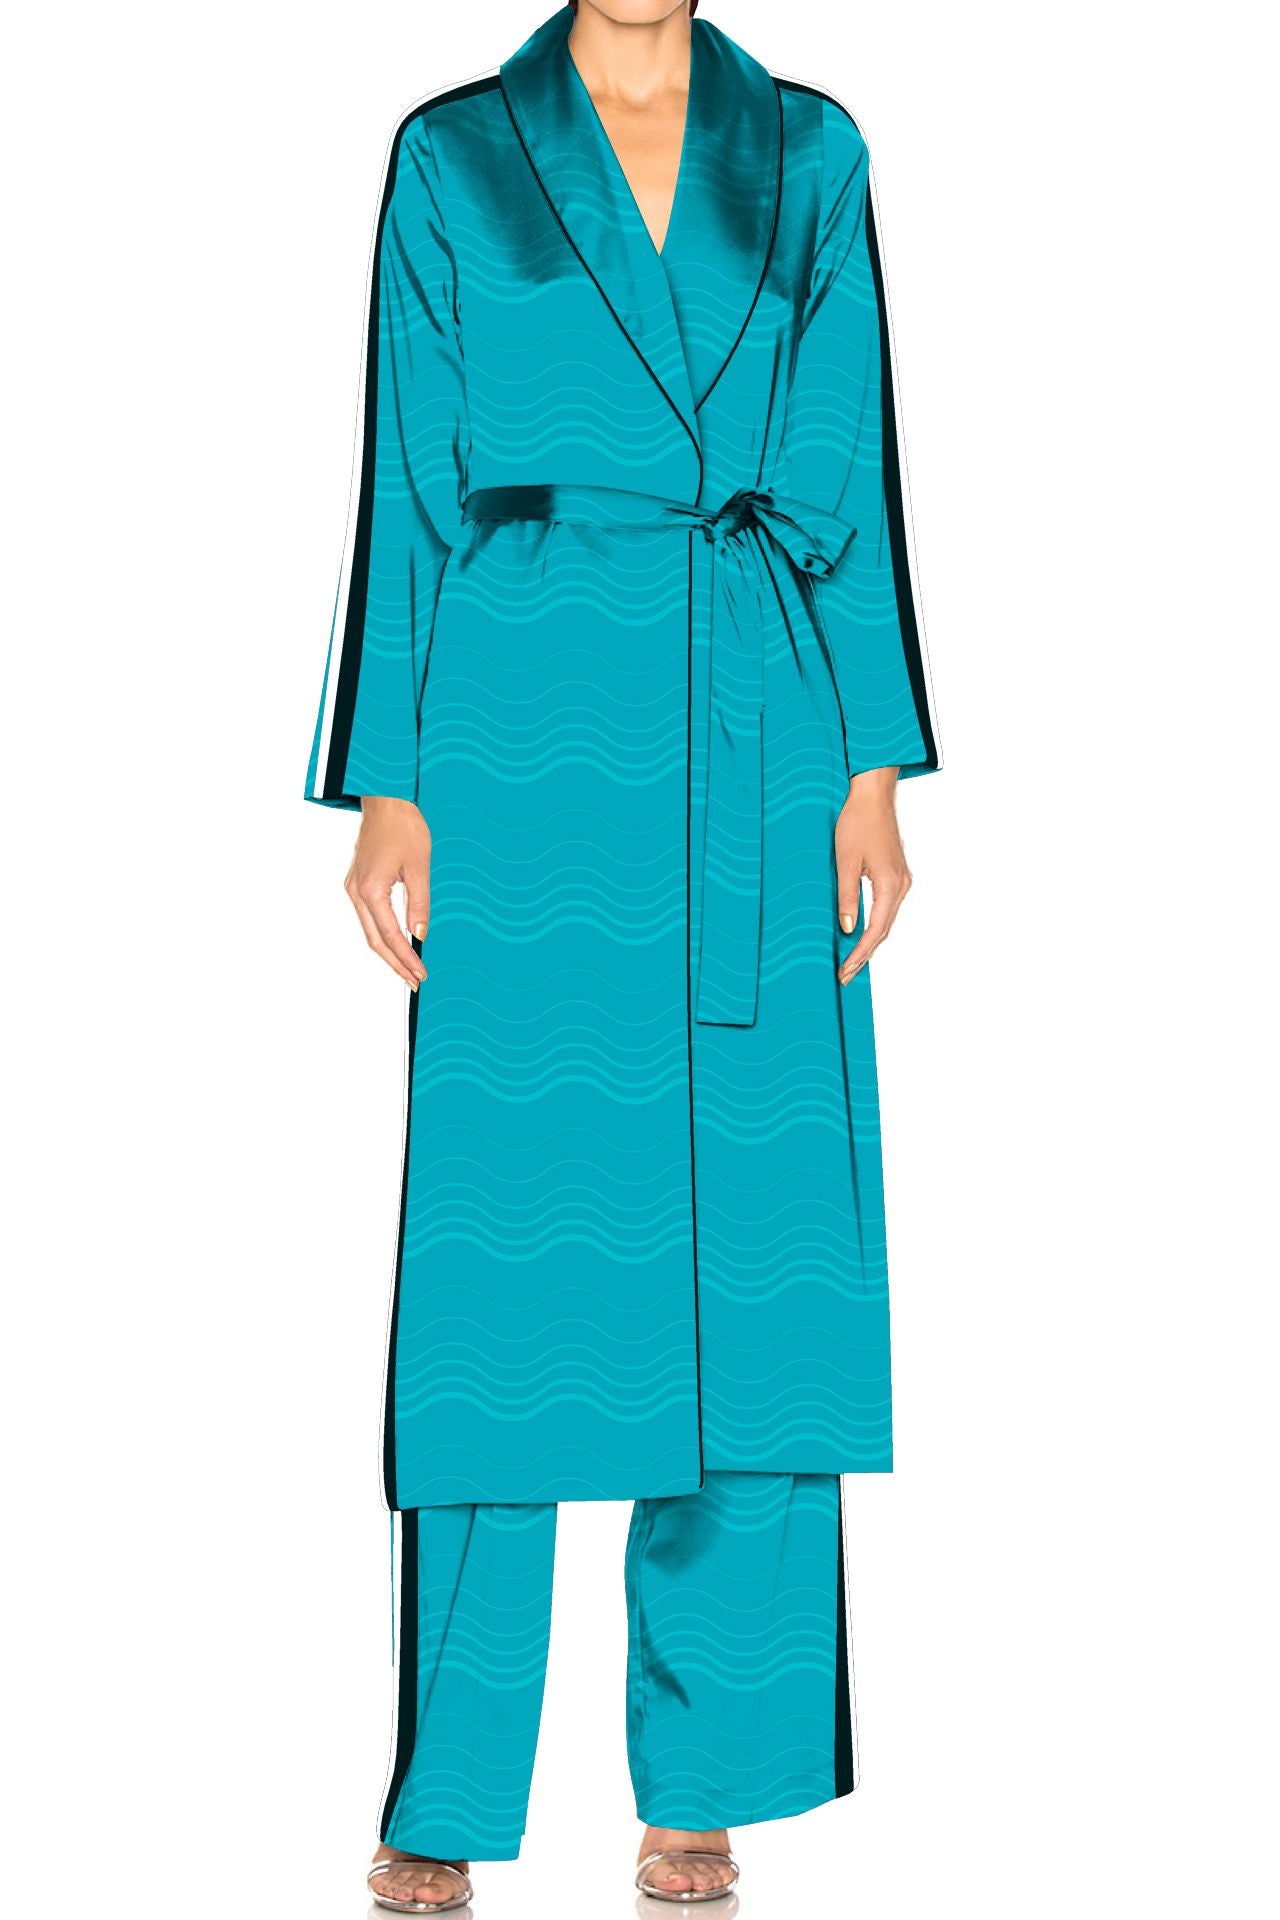 "Kyle X Shahida" "silk robe and pajama set" "robe and pajama set womens" "matching pjs and robe"